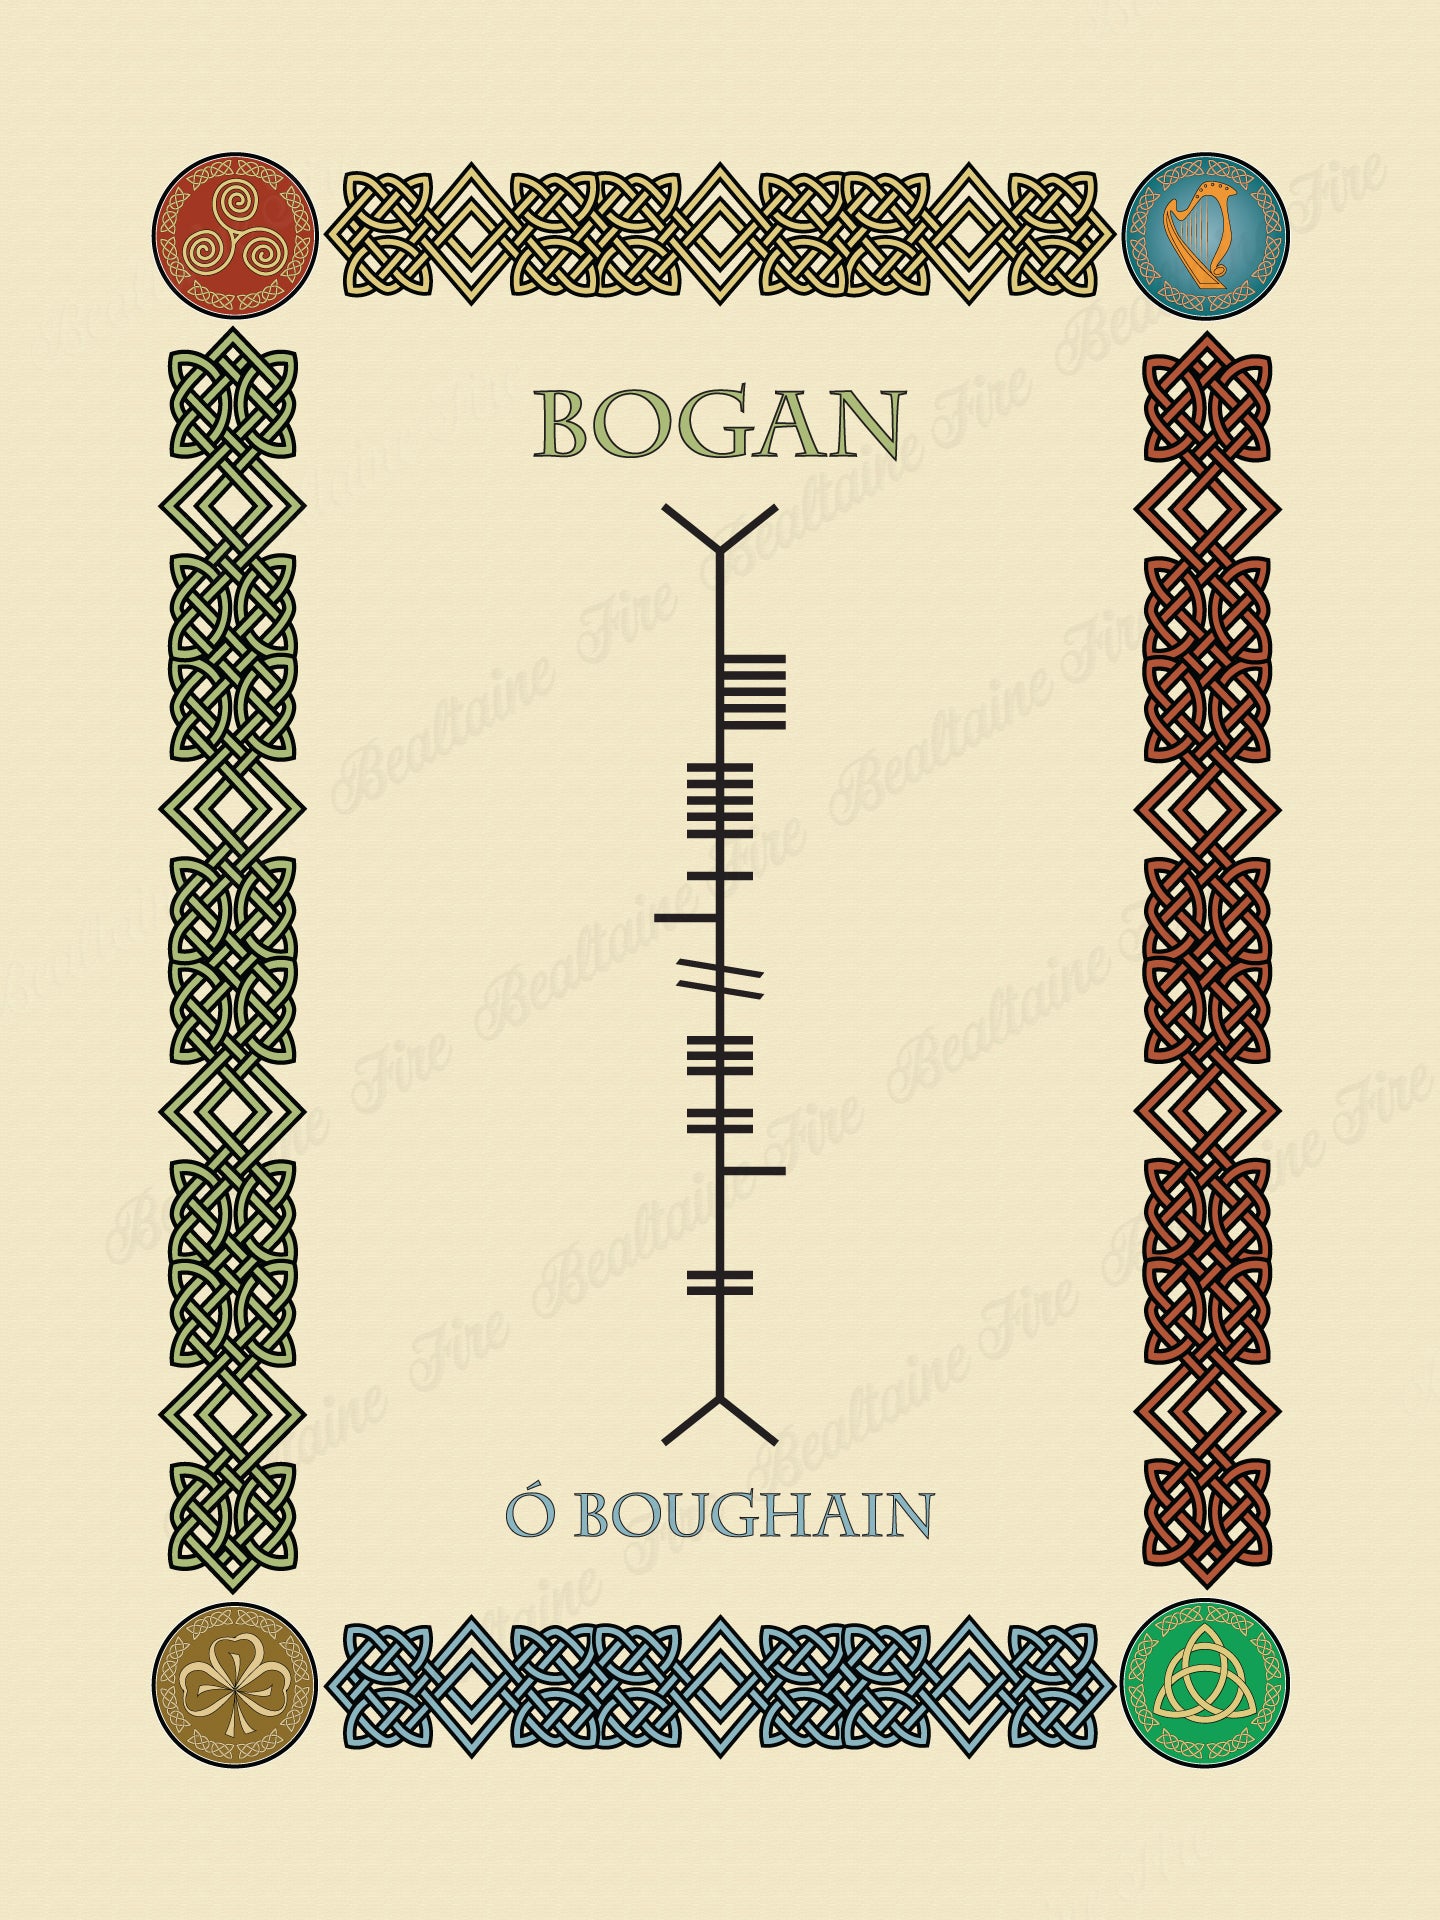 Bogan in Old Irish and Ogham - PDF Download